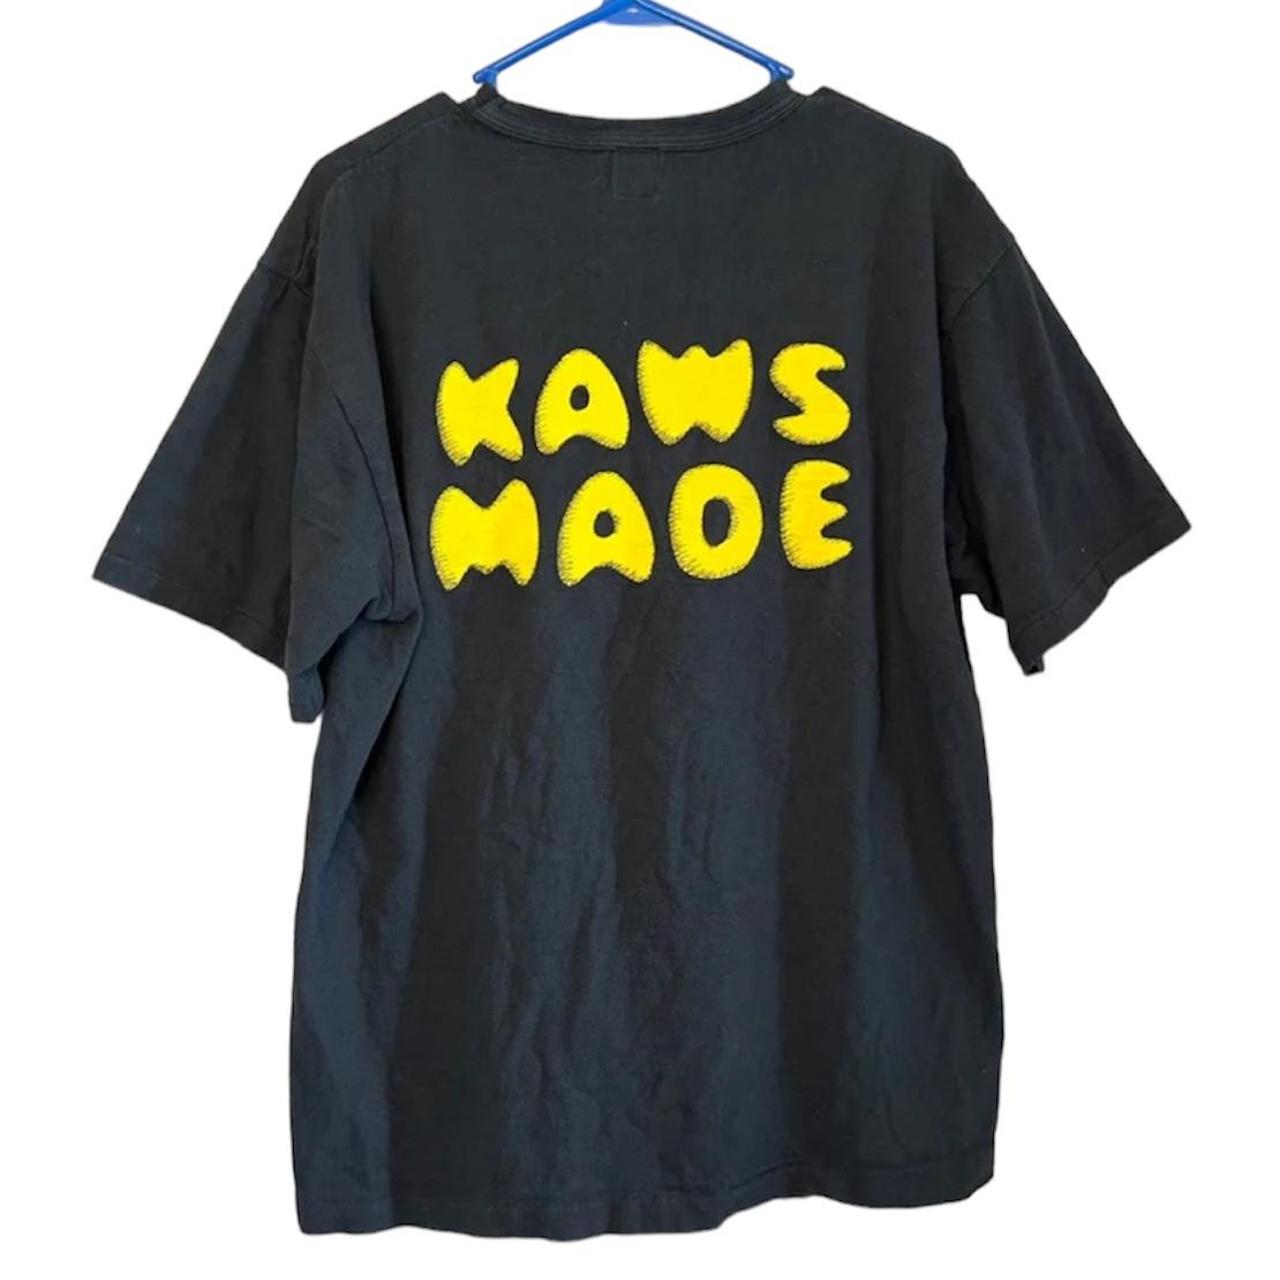 Kaws Made Human Made Bear Tee Shirt Super Rare and... - Depop